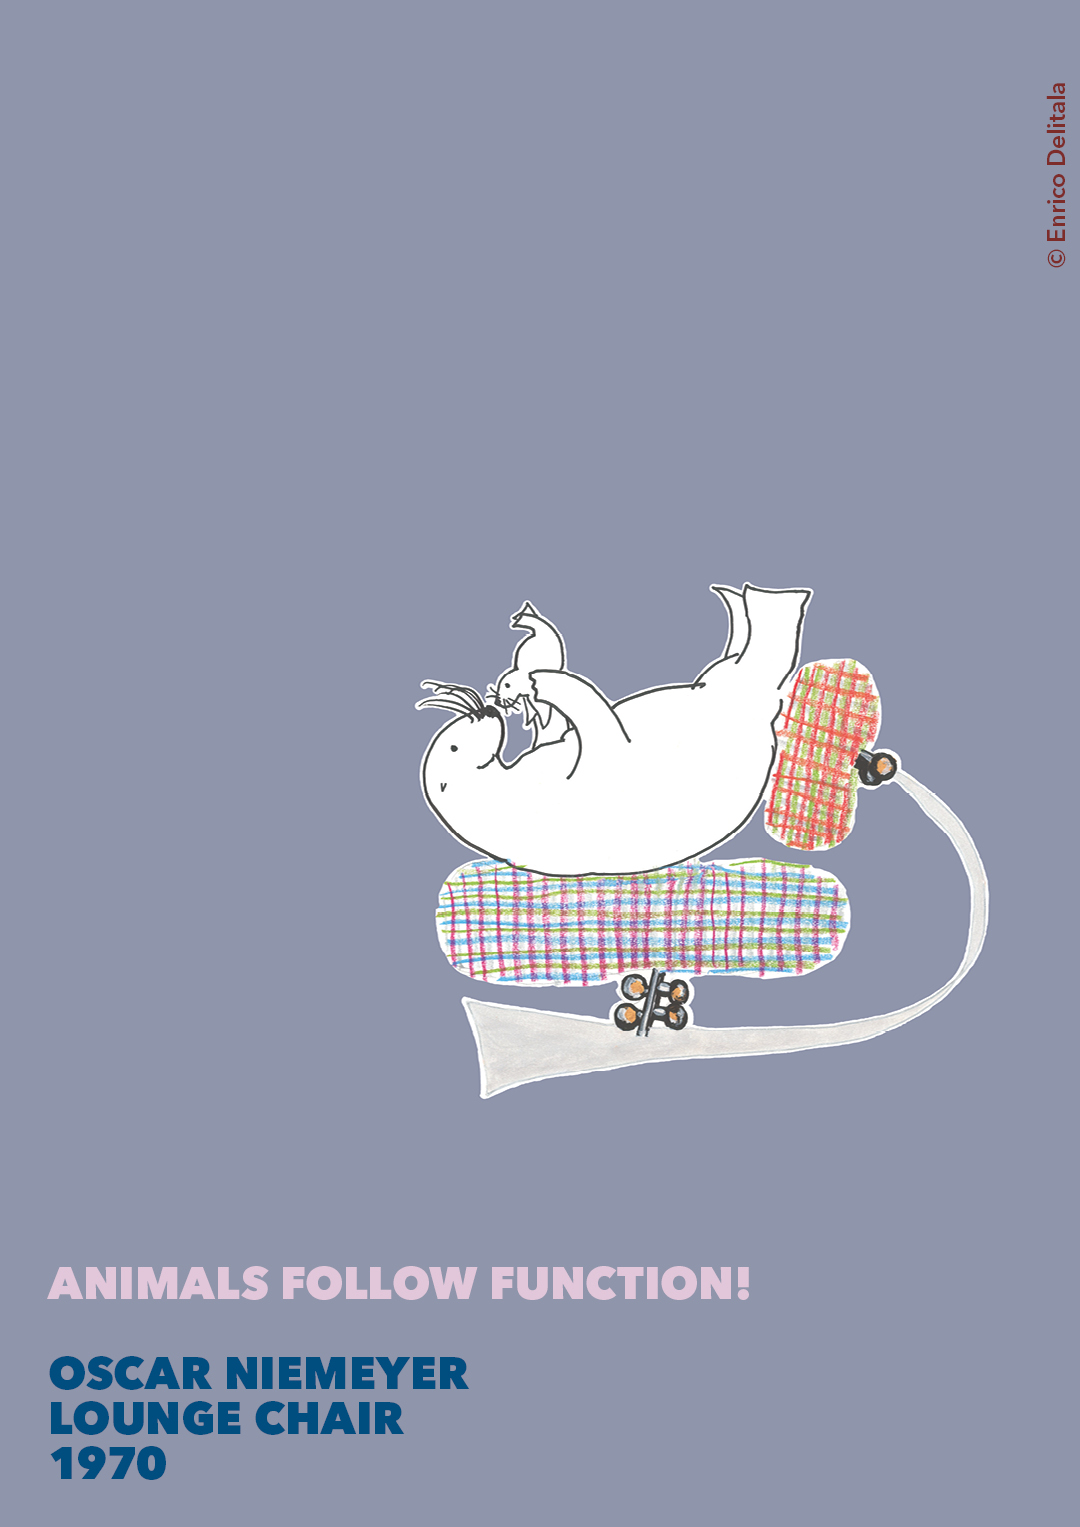 Otaria: Enrico Delitala illustrator animals follow function form follows function Oscar Niemeyer